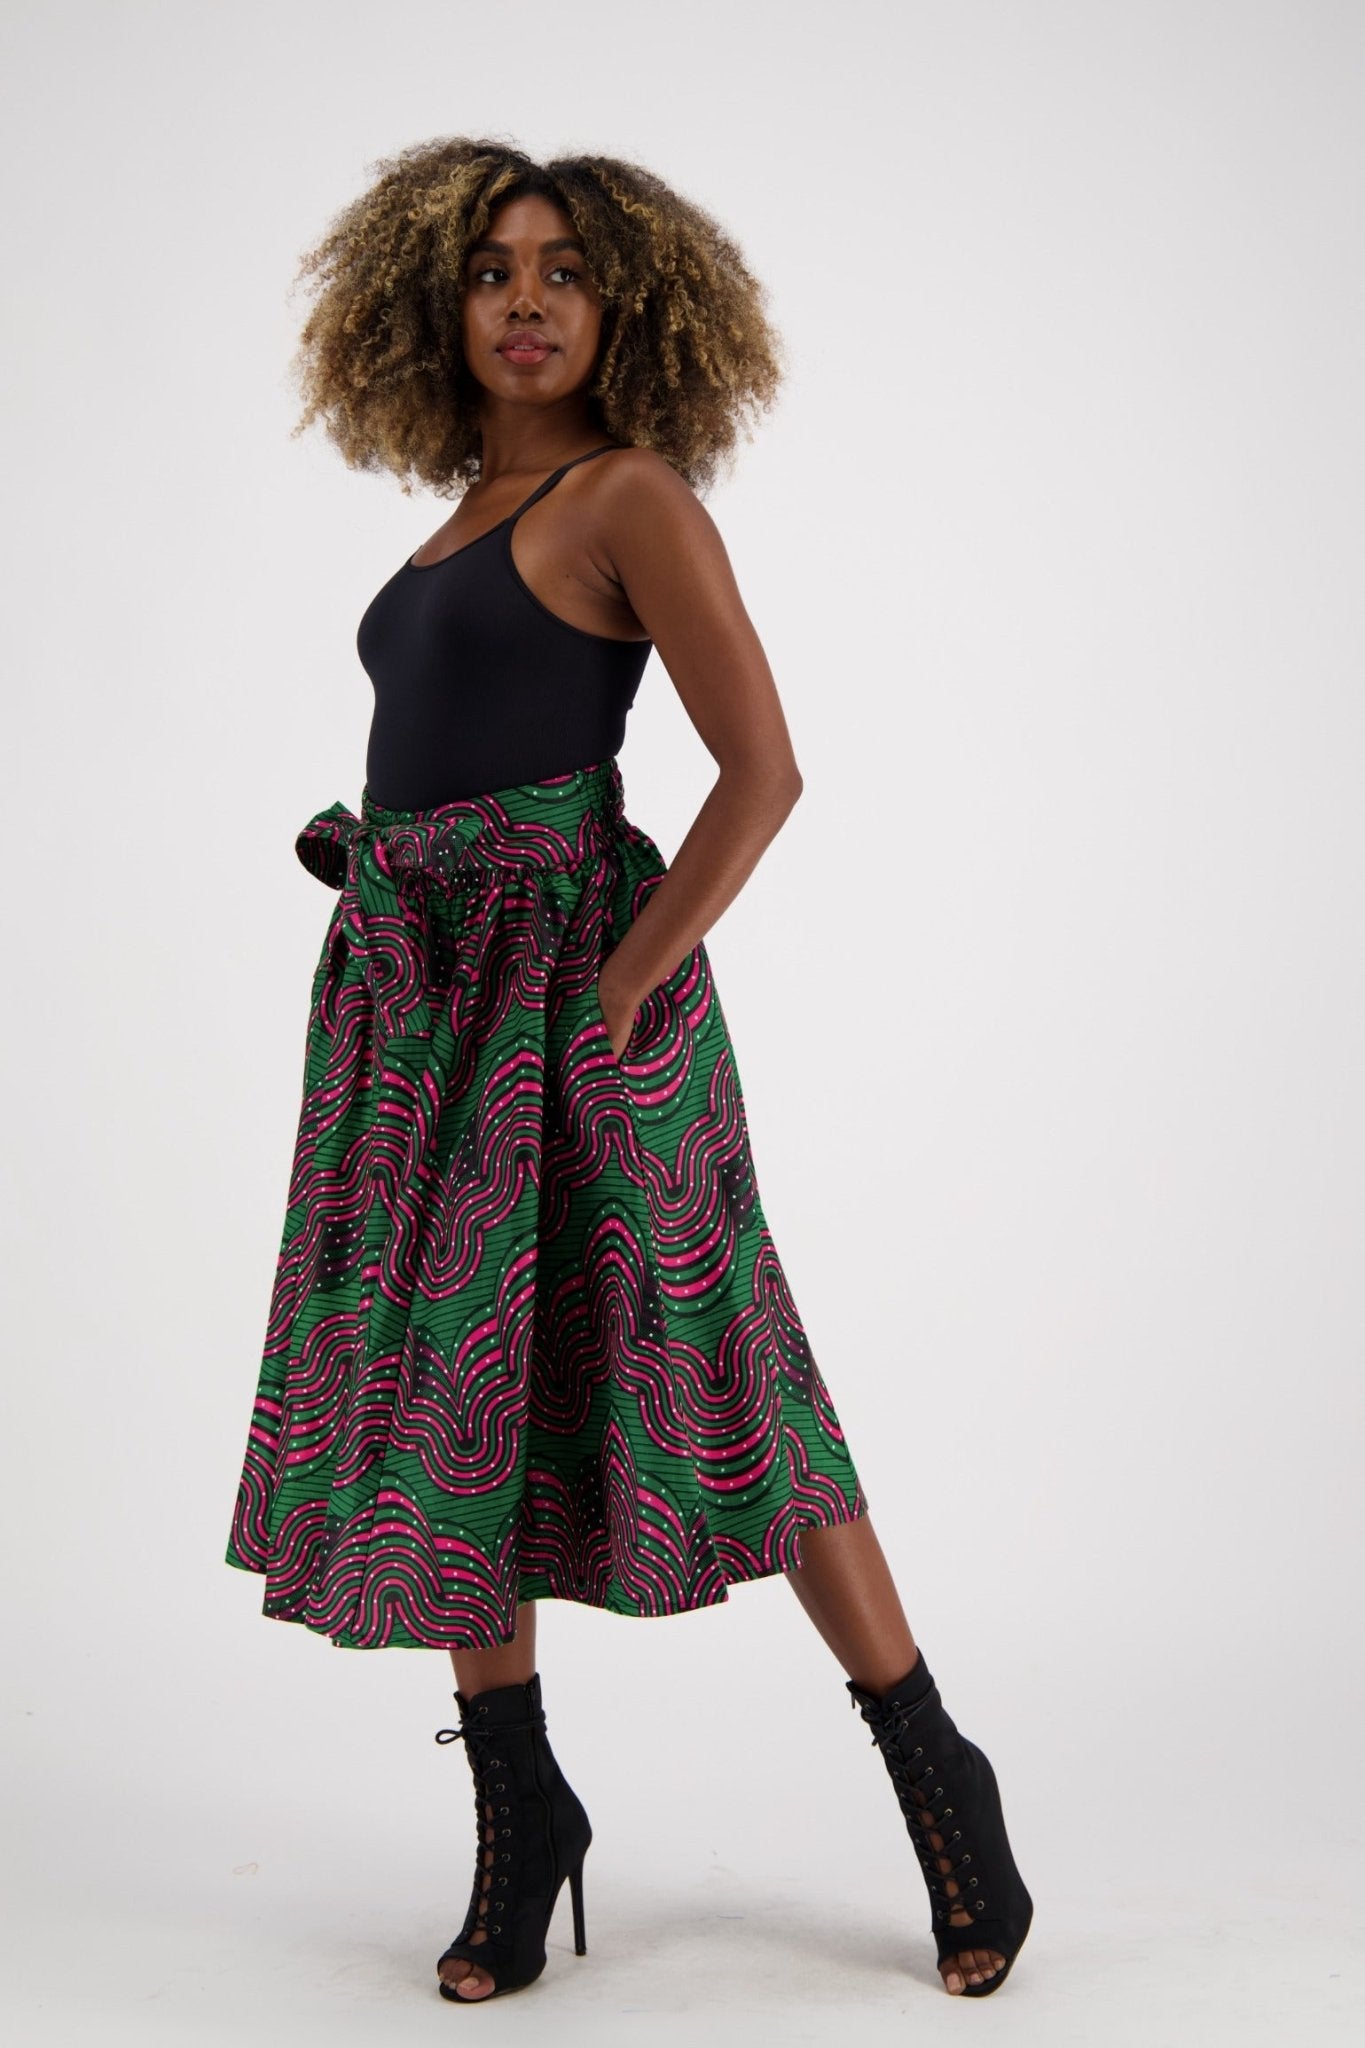 Mid-Length African Print Skirt 16321-243 - Advance Apparels Inc